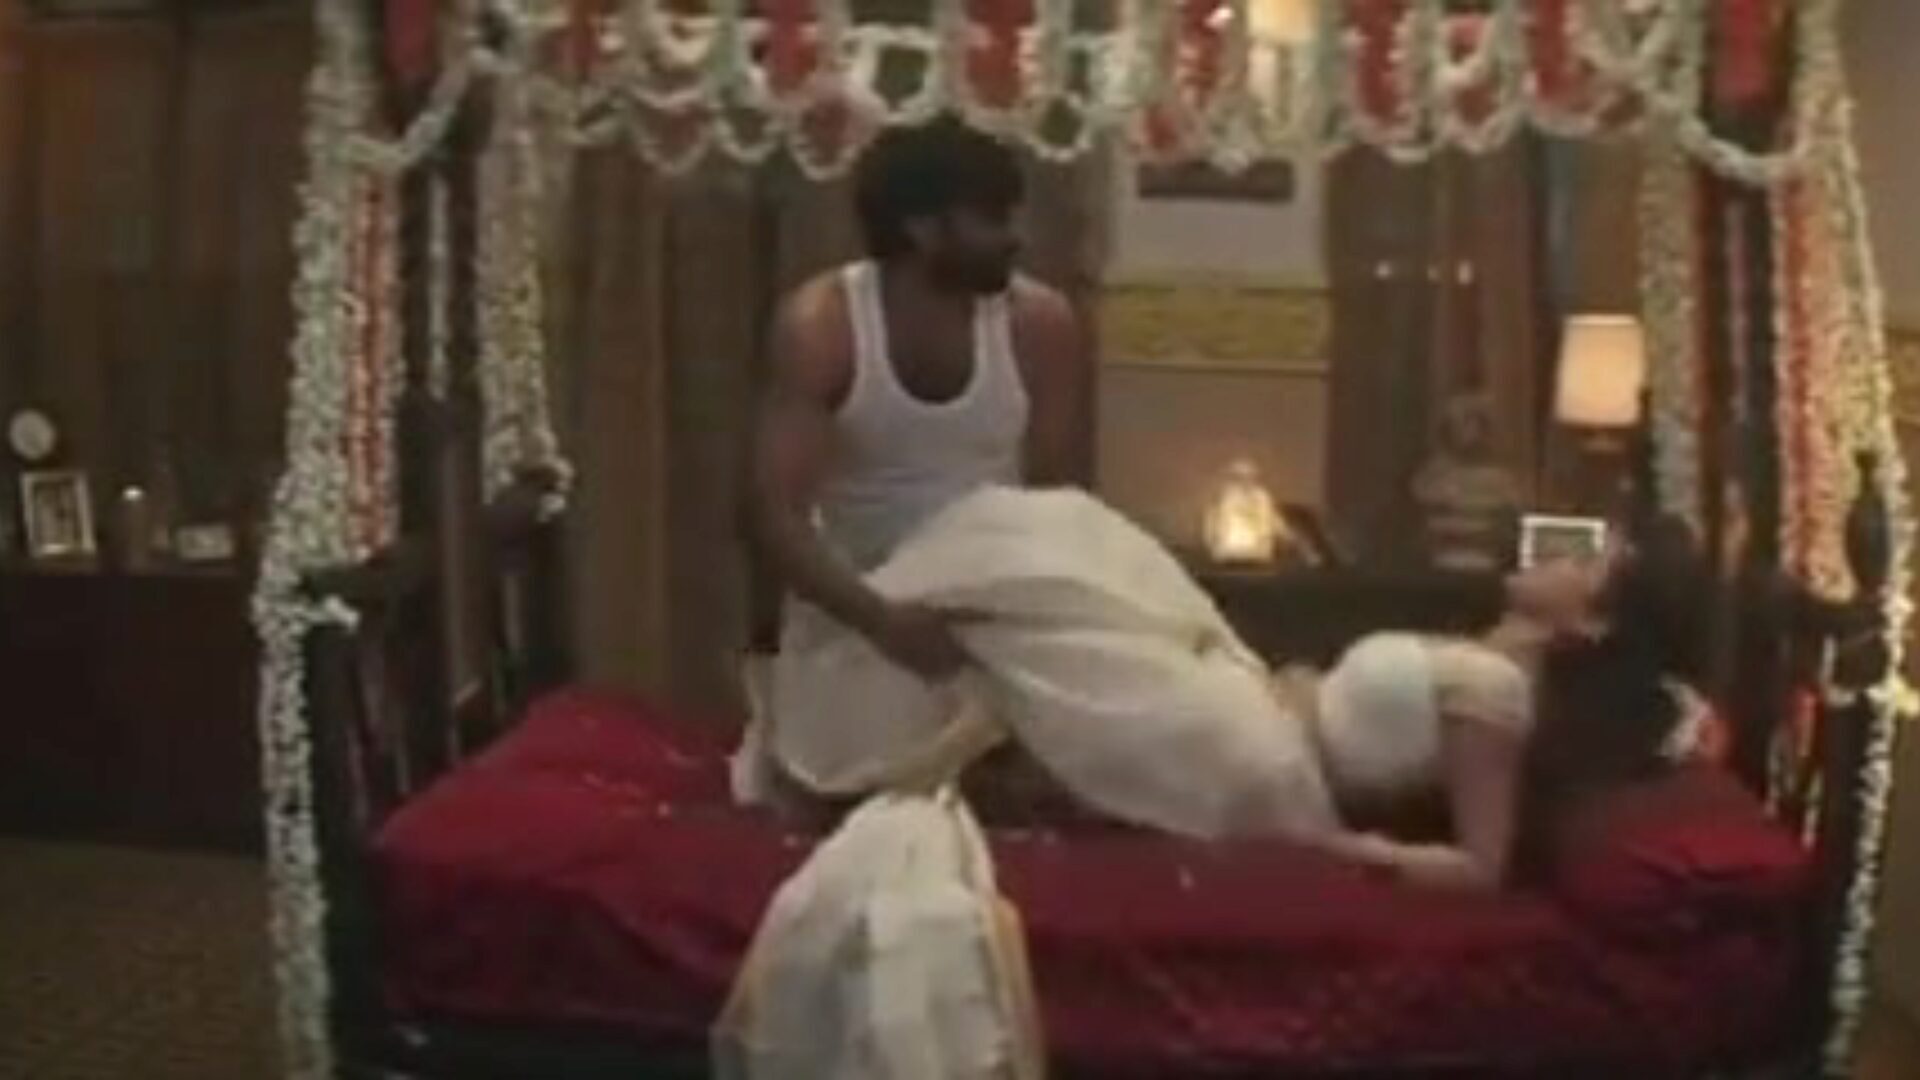 Telugu movie scene spouse rouge fuck-a-thon spouse coercive fucky-fucky wifey